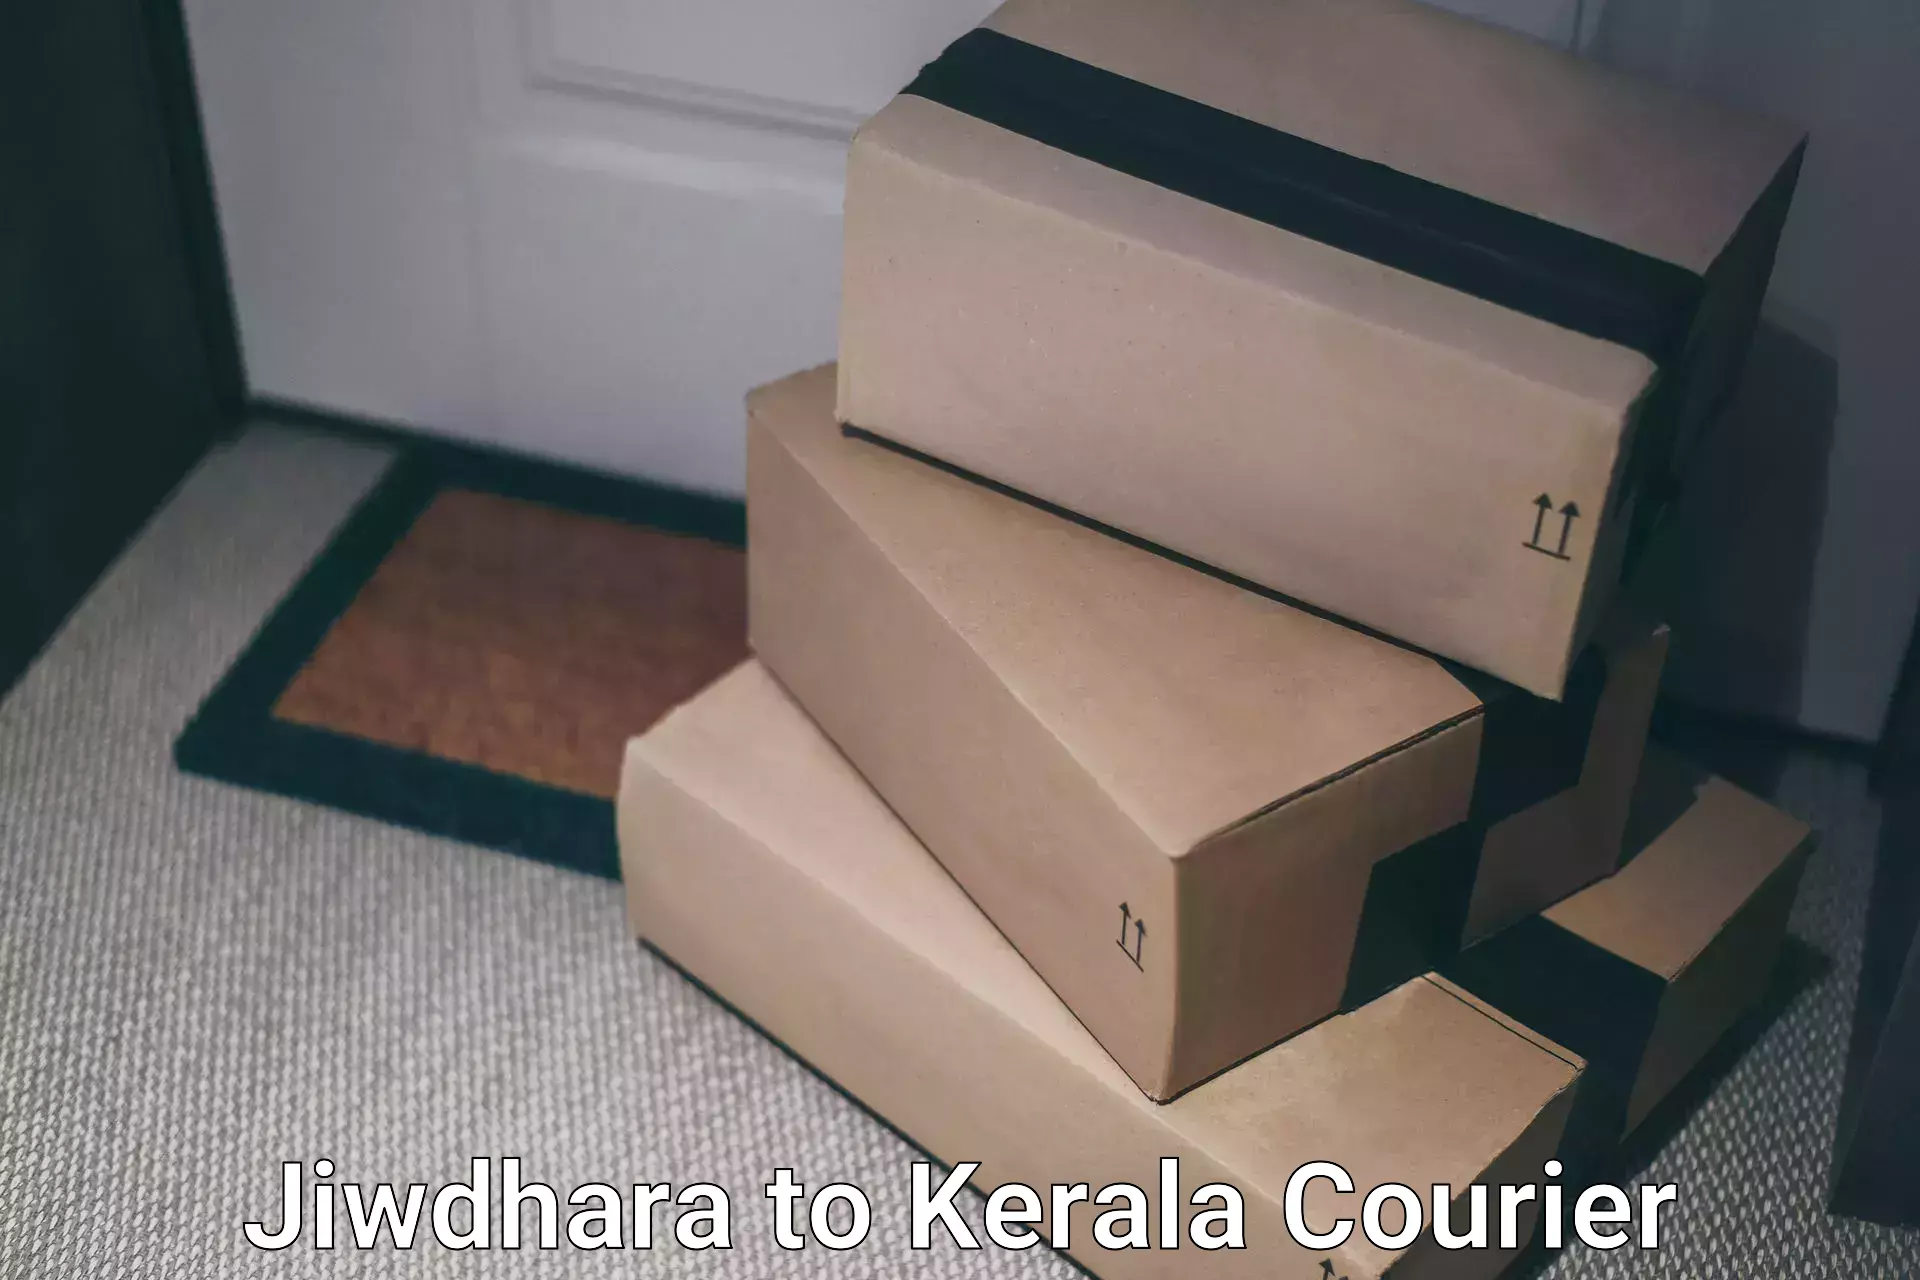 Nationwide delivery network Jiwdhara to Mahe